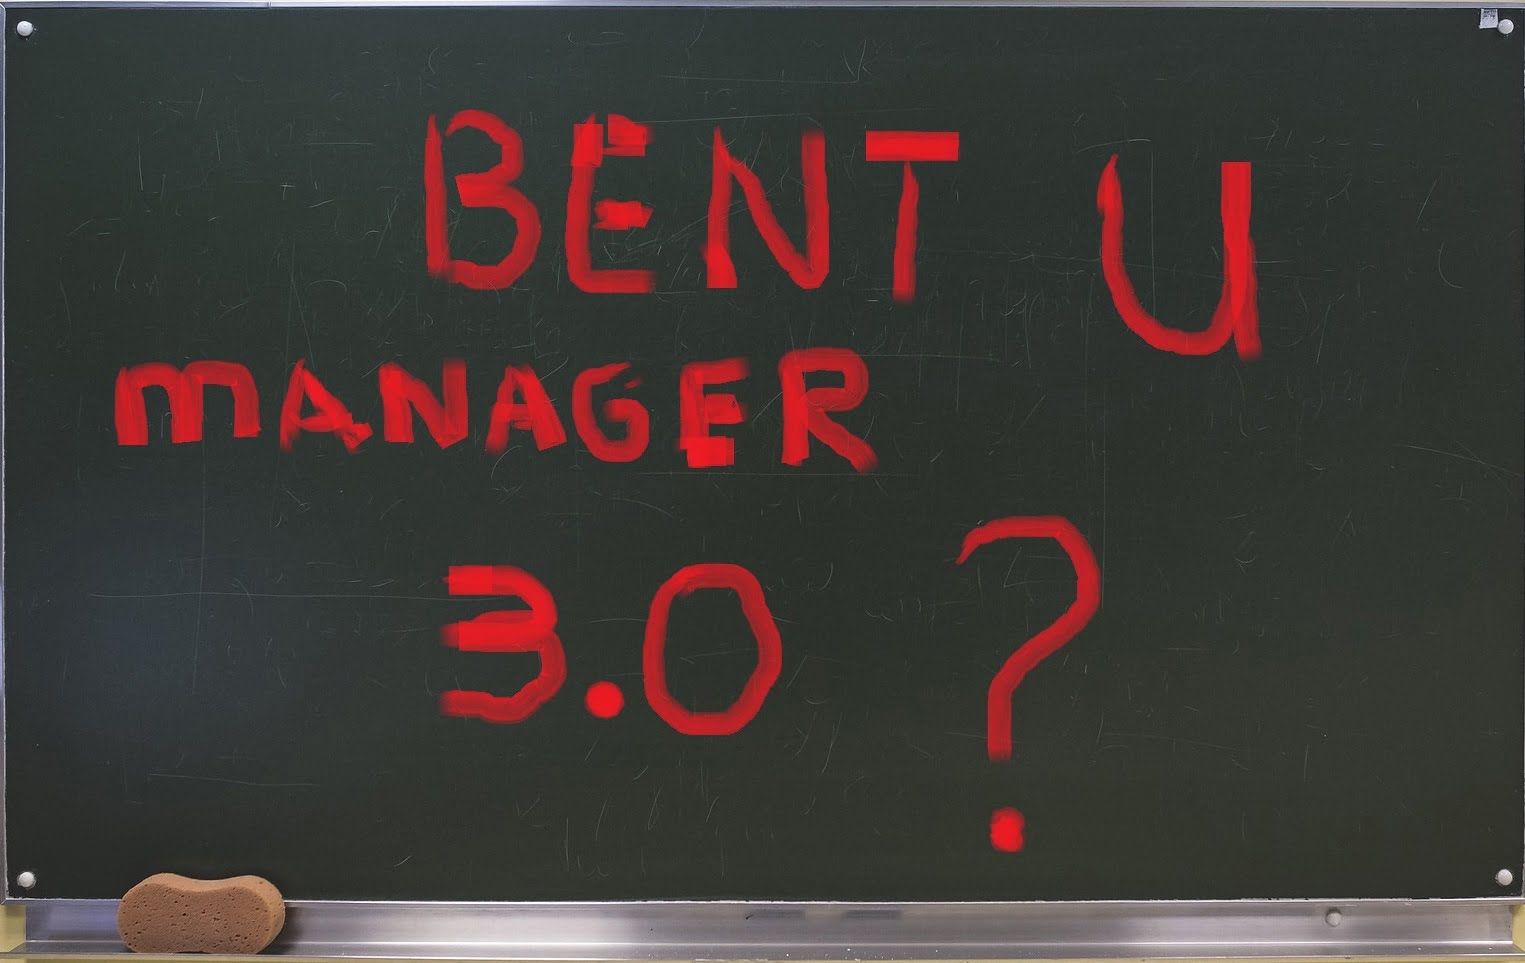 Bent-u-manager-3.0-Company-Optimizer